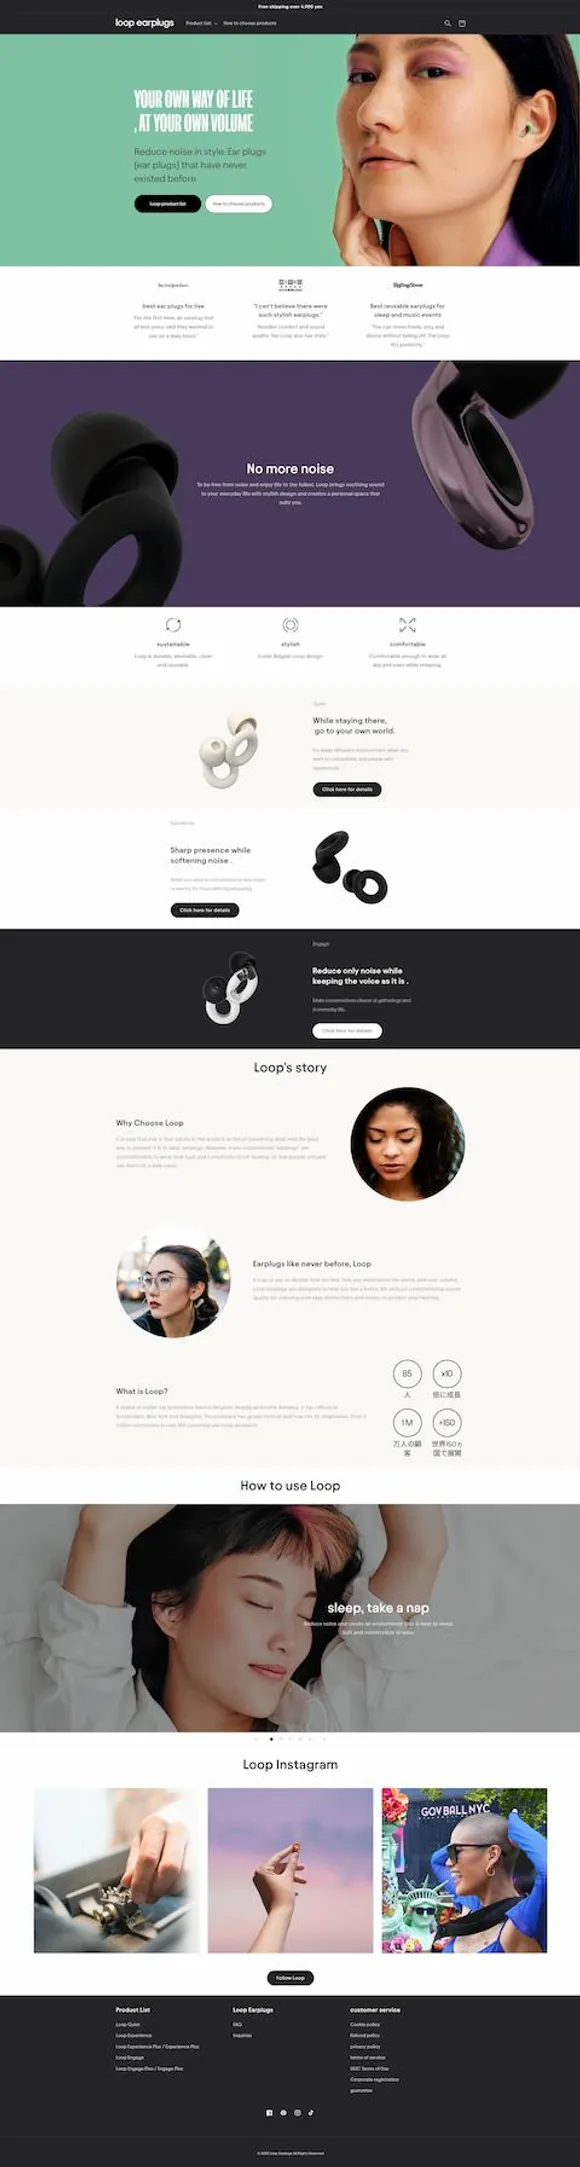 Web Design Glory Website Portfolio-10